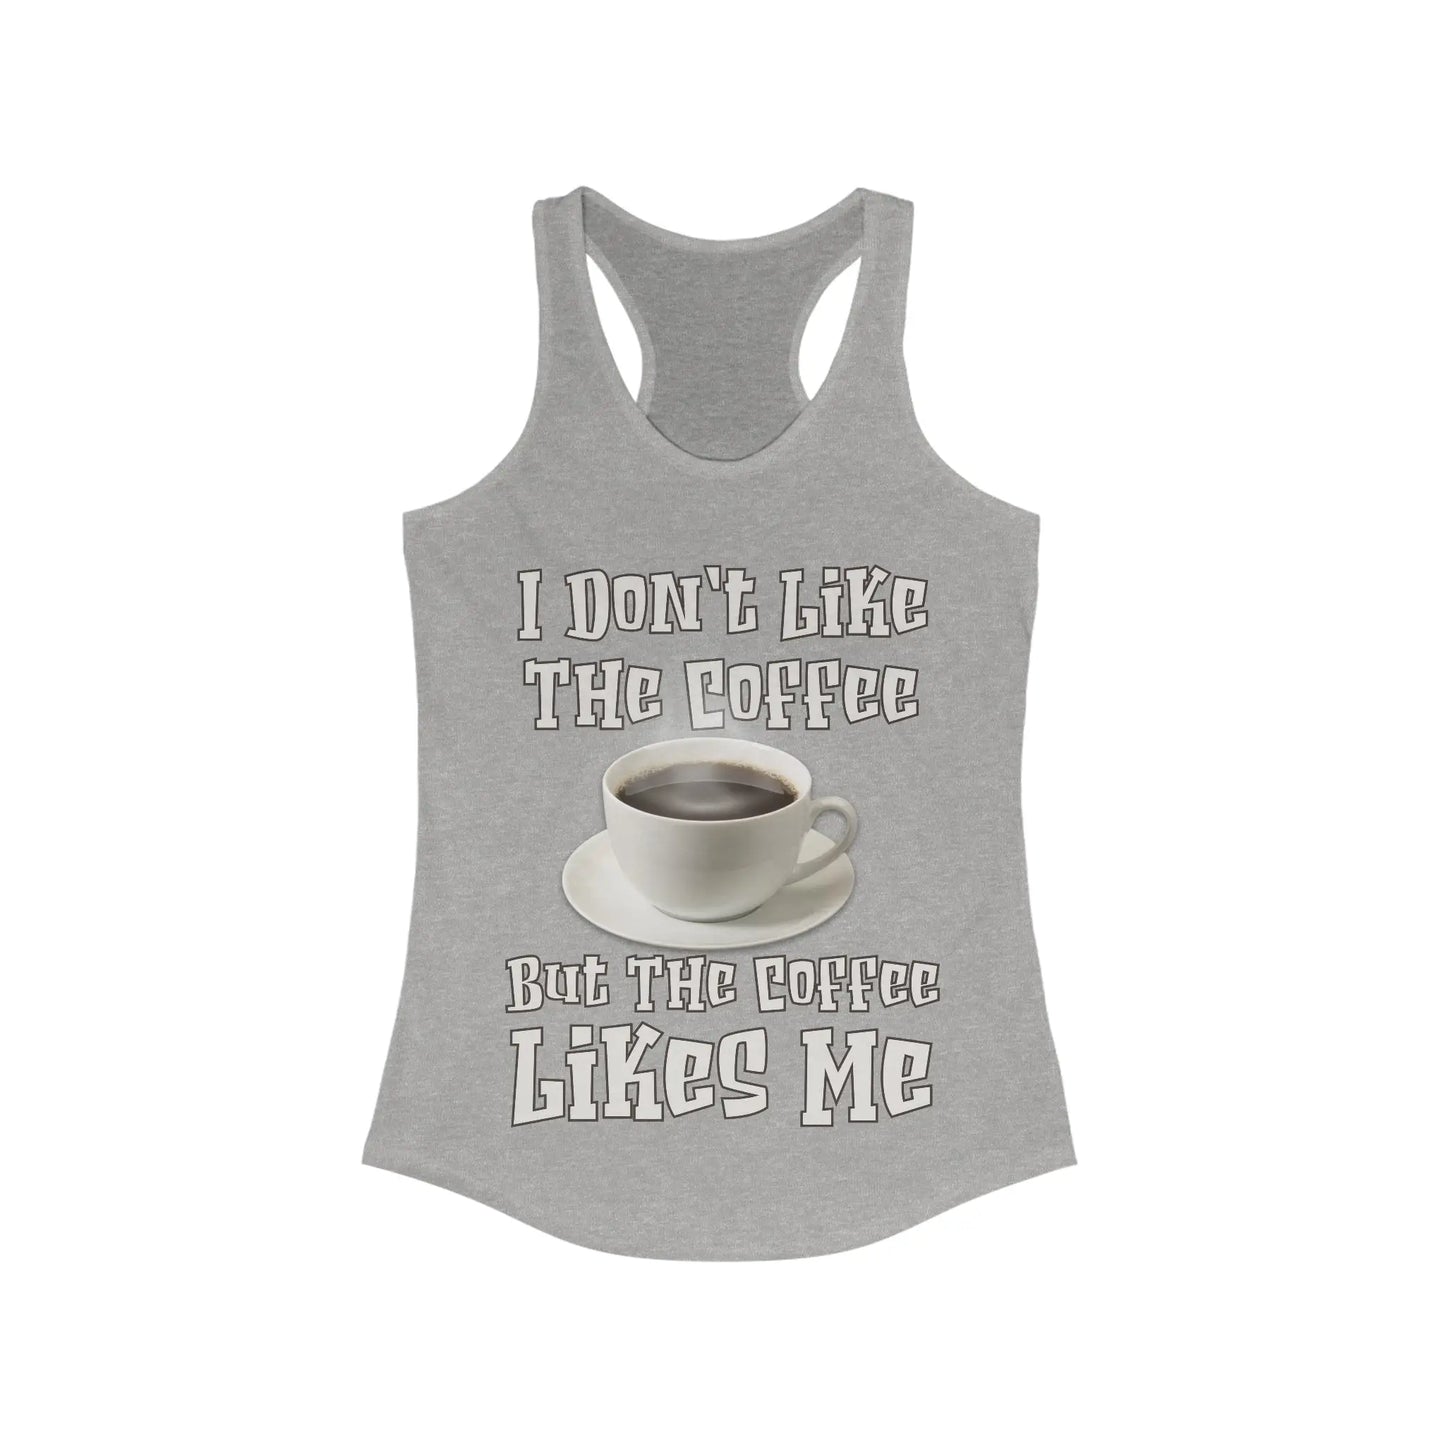 I Don't Like The Coffee Women's Racerback Tank - Wicked Tees